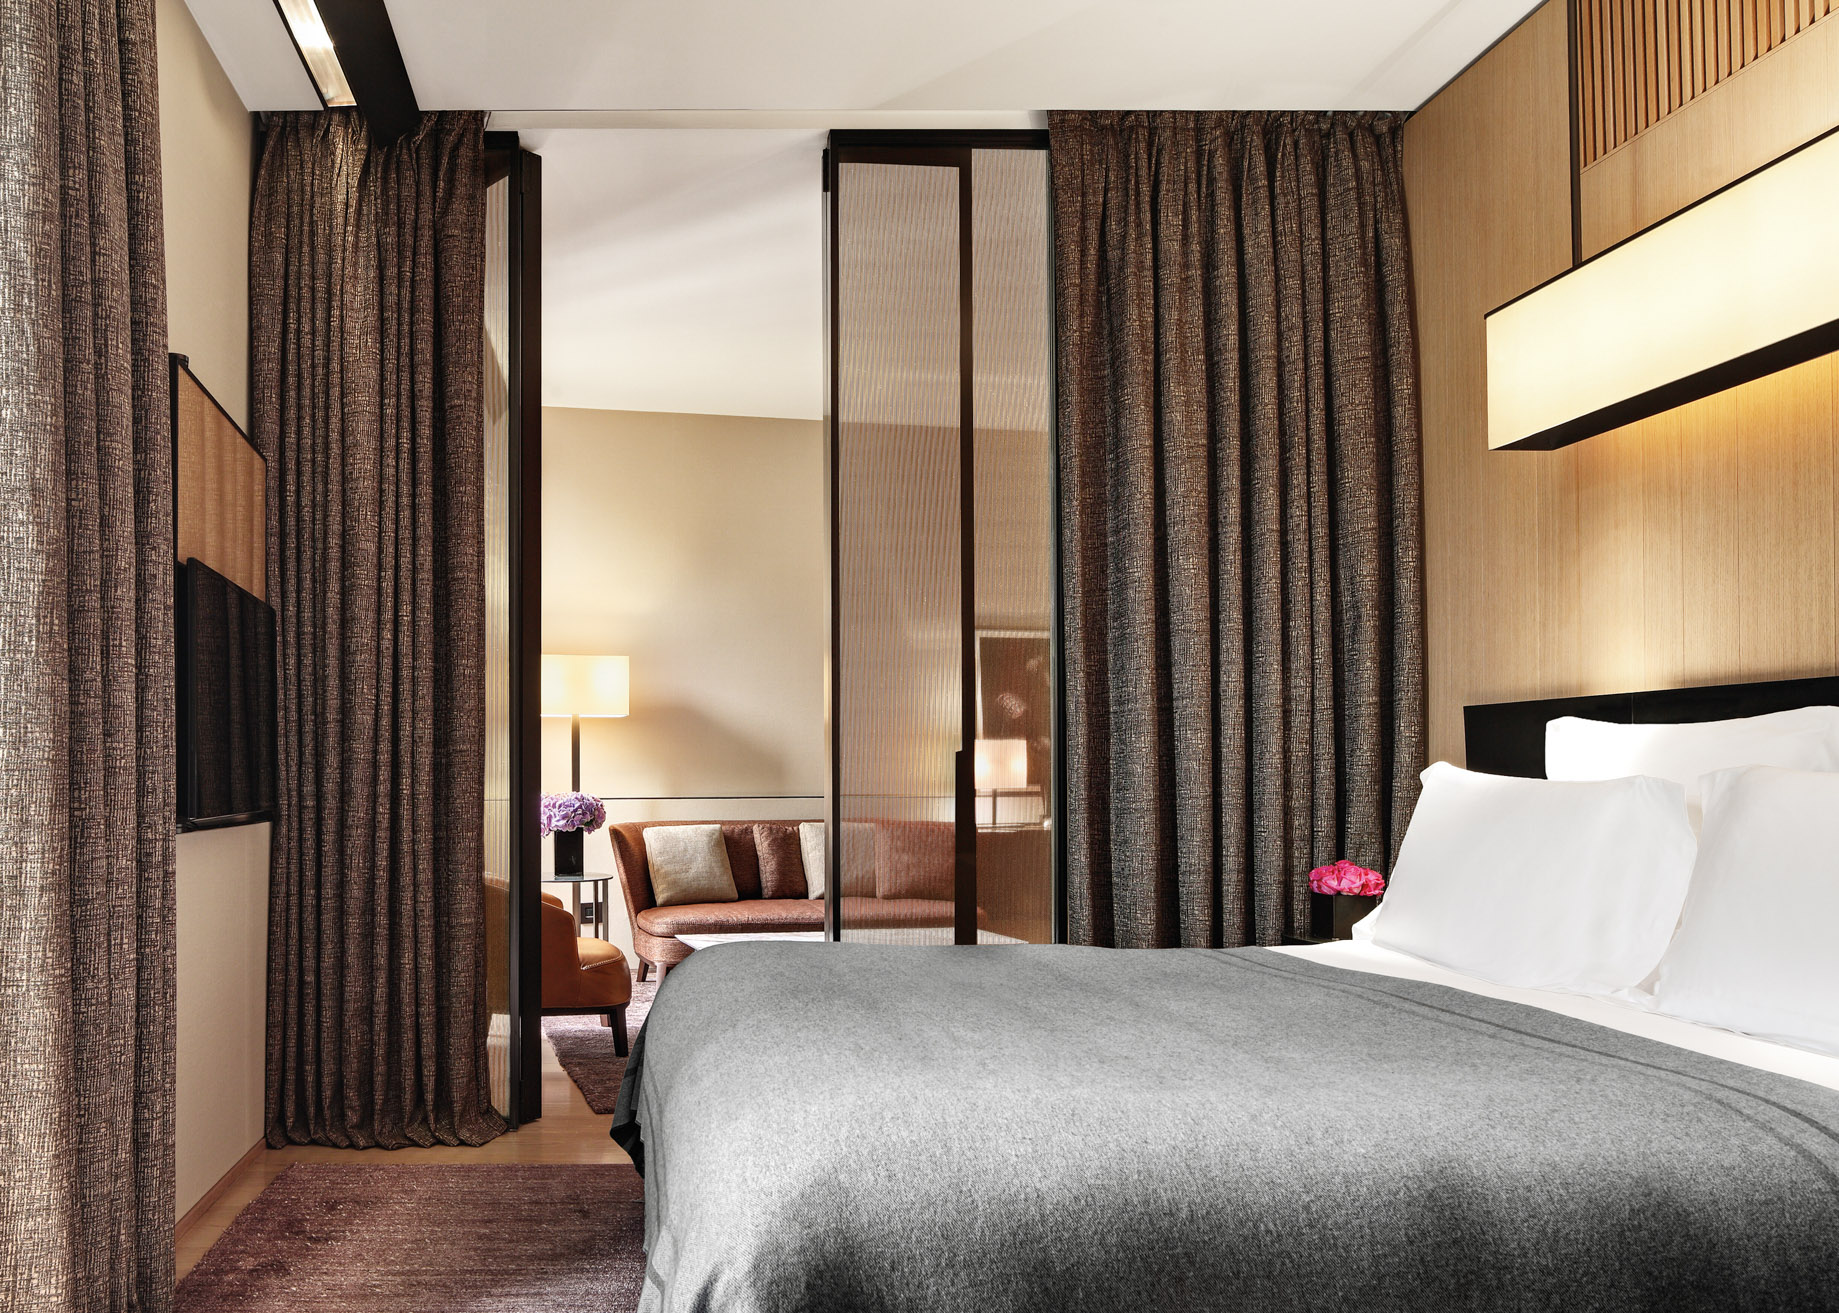 Bvlgari Hotel Milano – Milan, Italy – One Bedroom Suite Bedroom